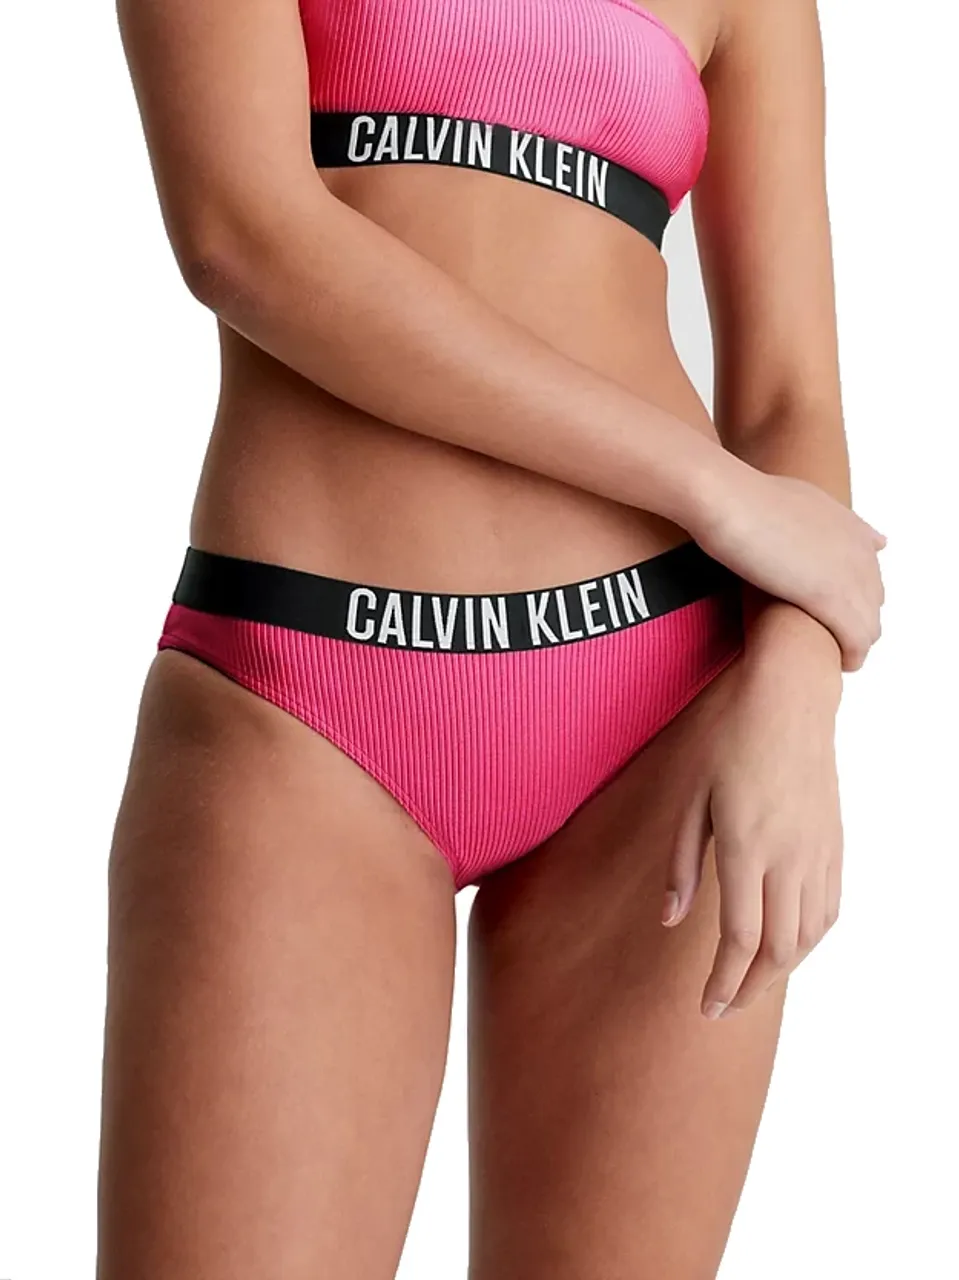 Calvin Klein Classic